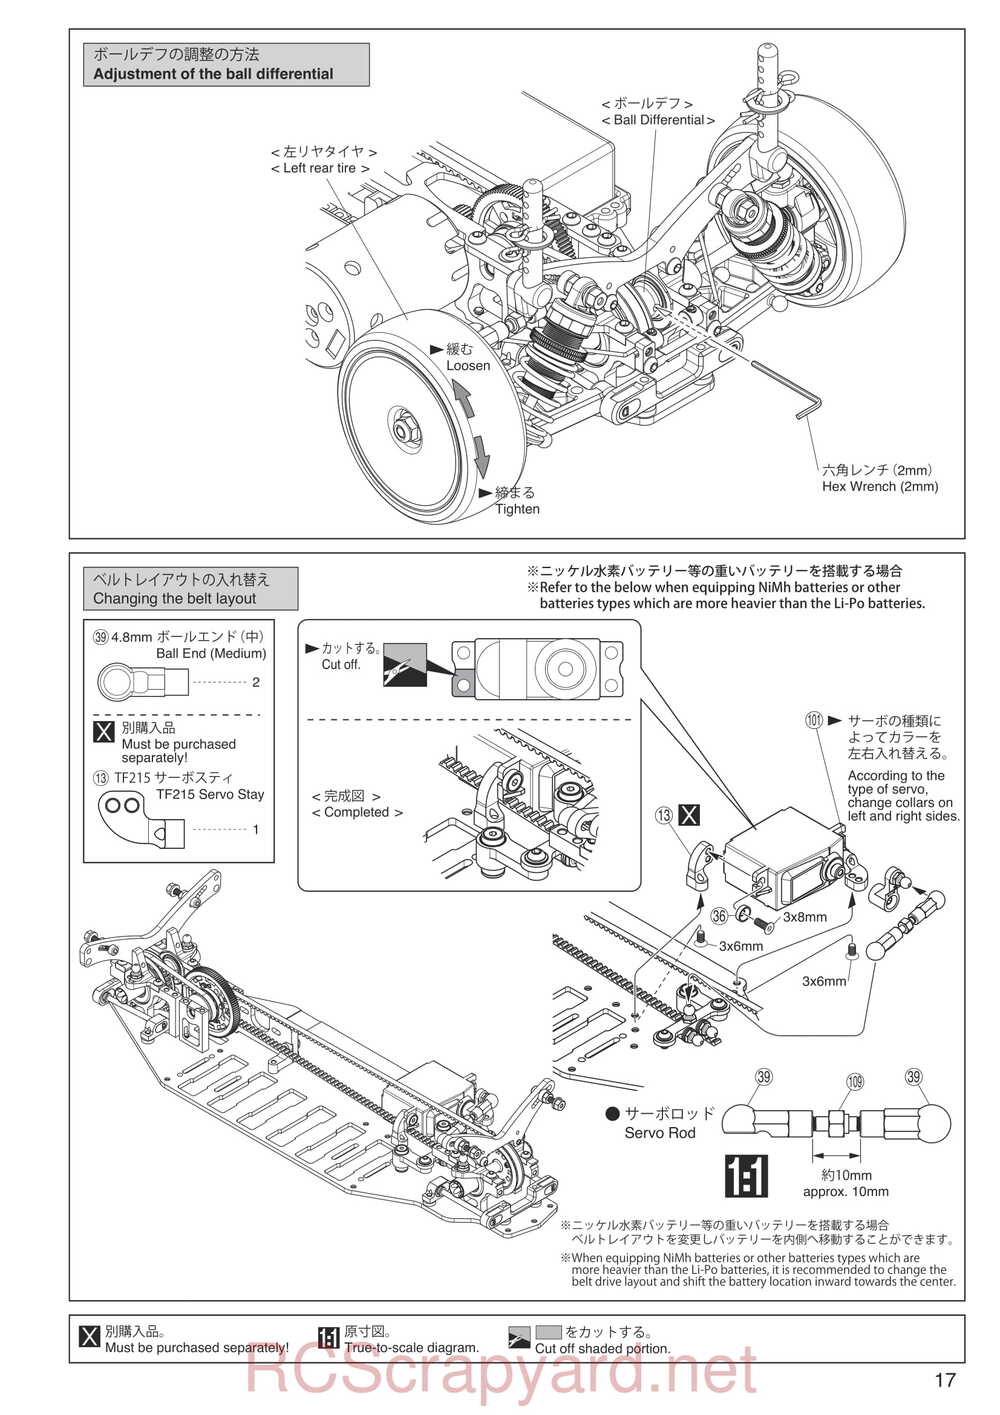 Kyosho - 30024 - TF6 - Manual - Page 17